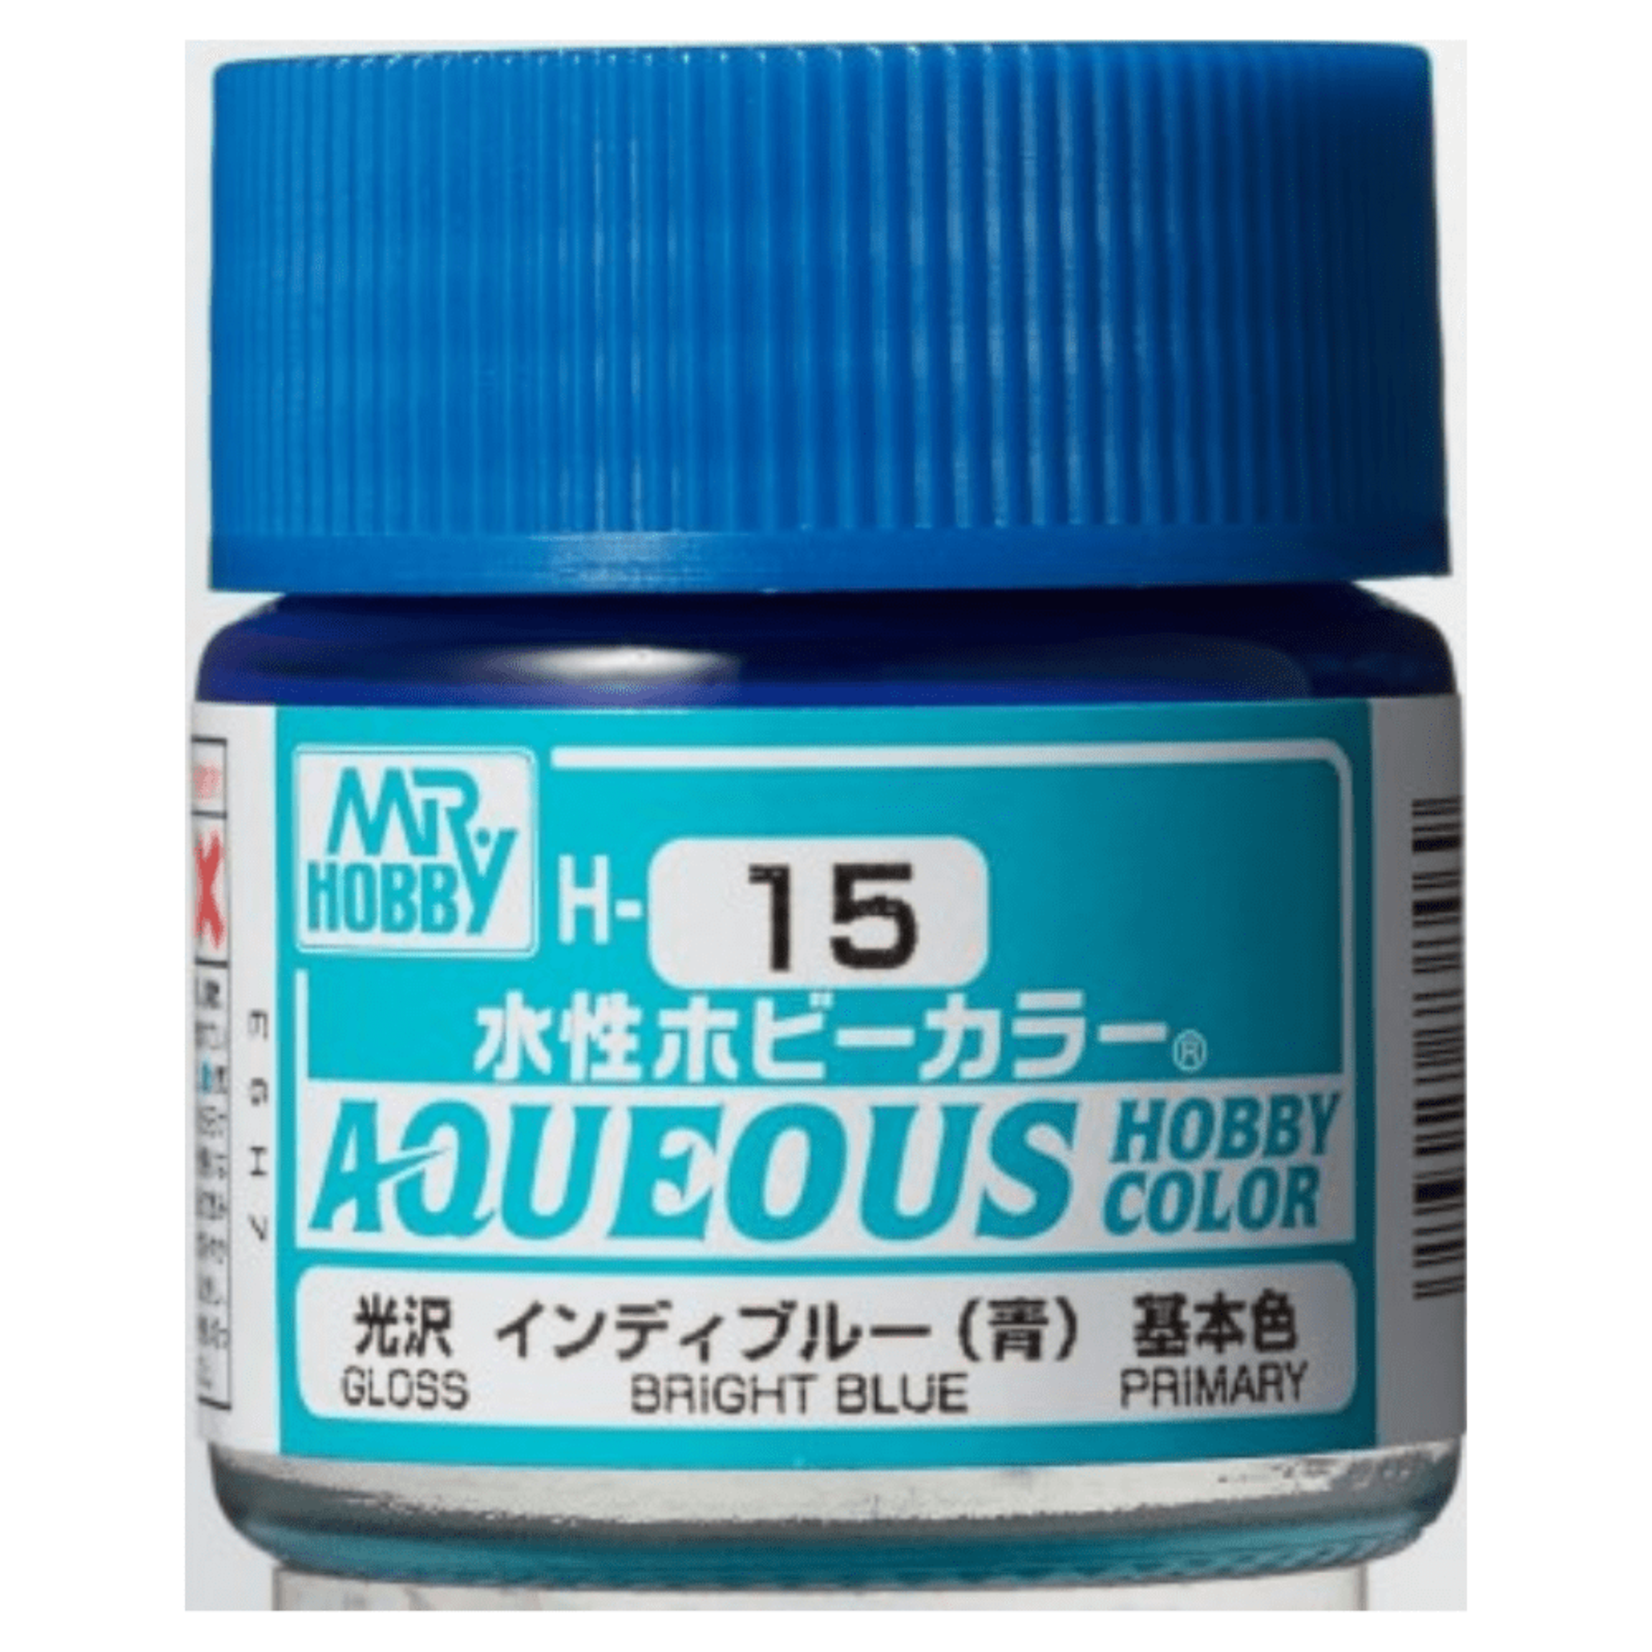 GSI Creos GNZ-H15 Mr Hobby H15 Aqueous Gloss Bright Blue - Acrylic 10ml